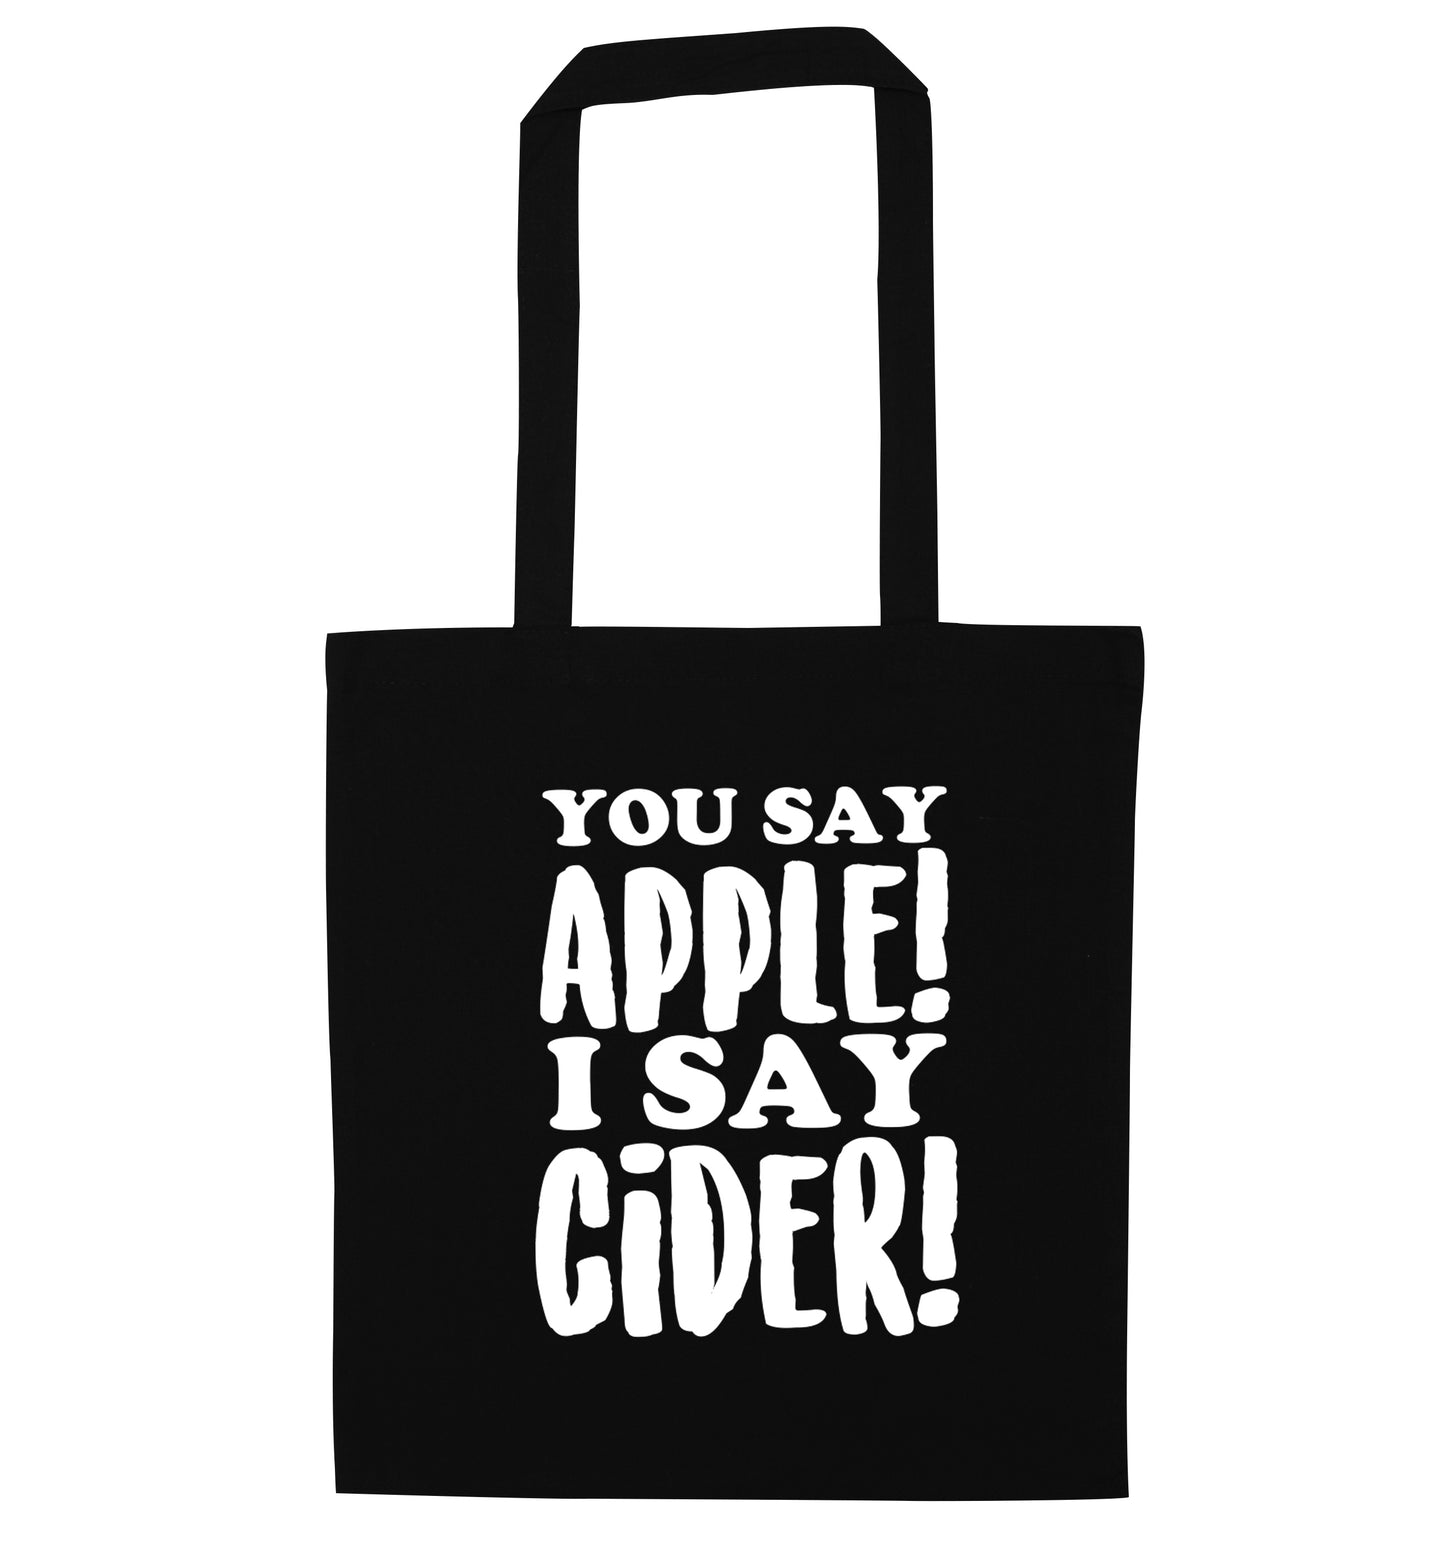 You say apple I say cider! black tote bag